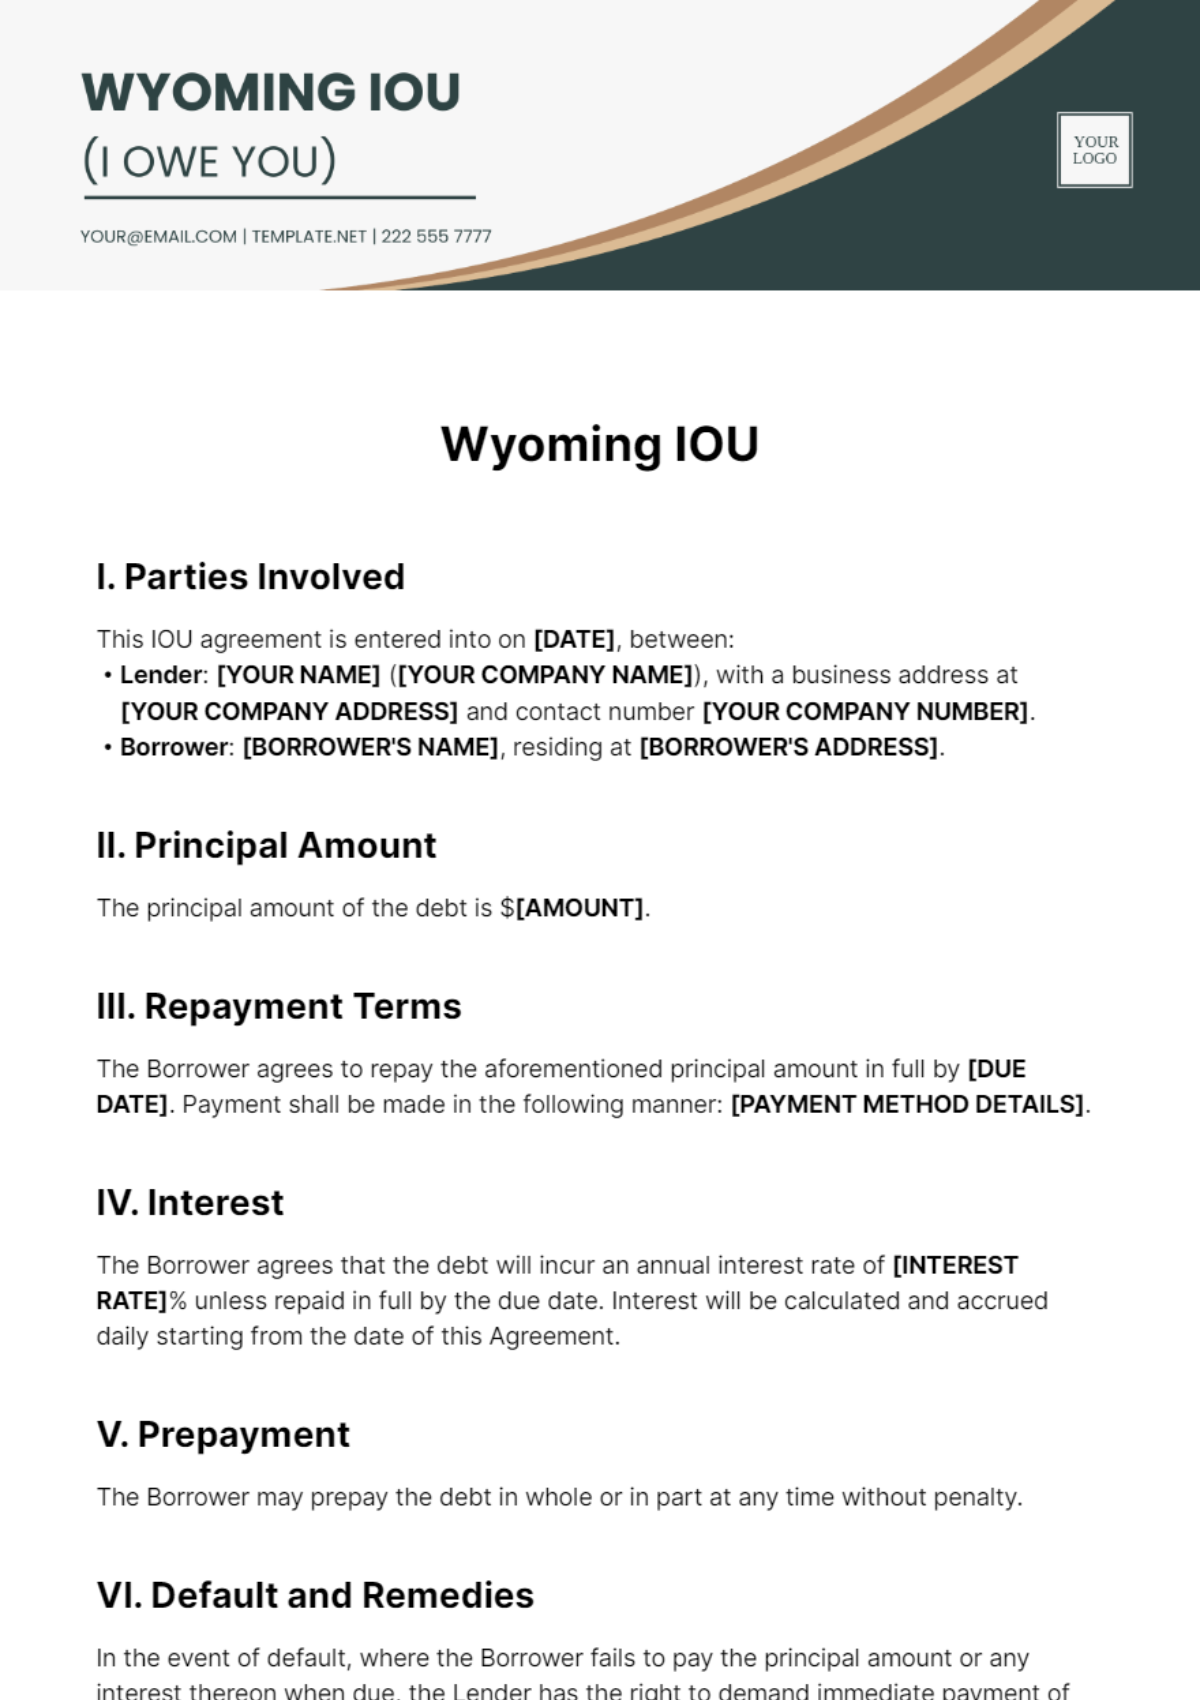 Free Wyoming IOU Template